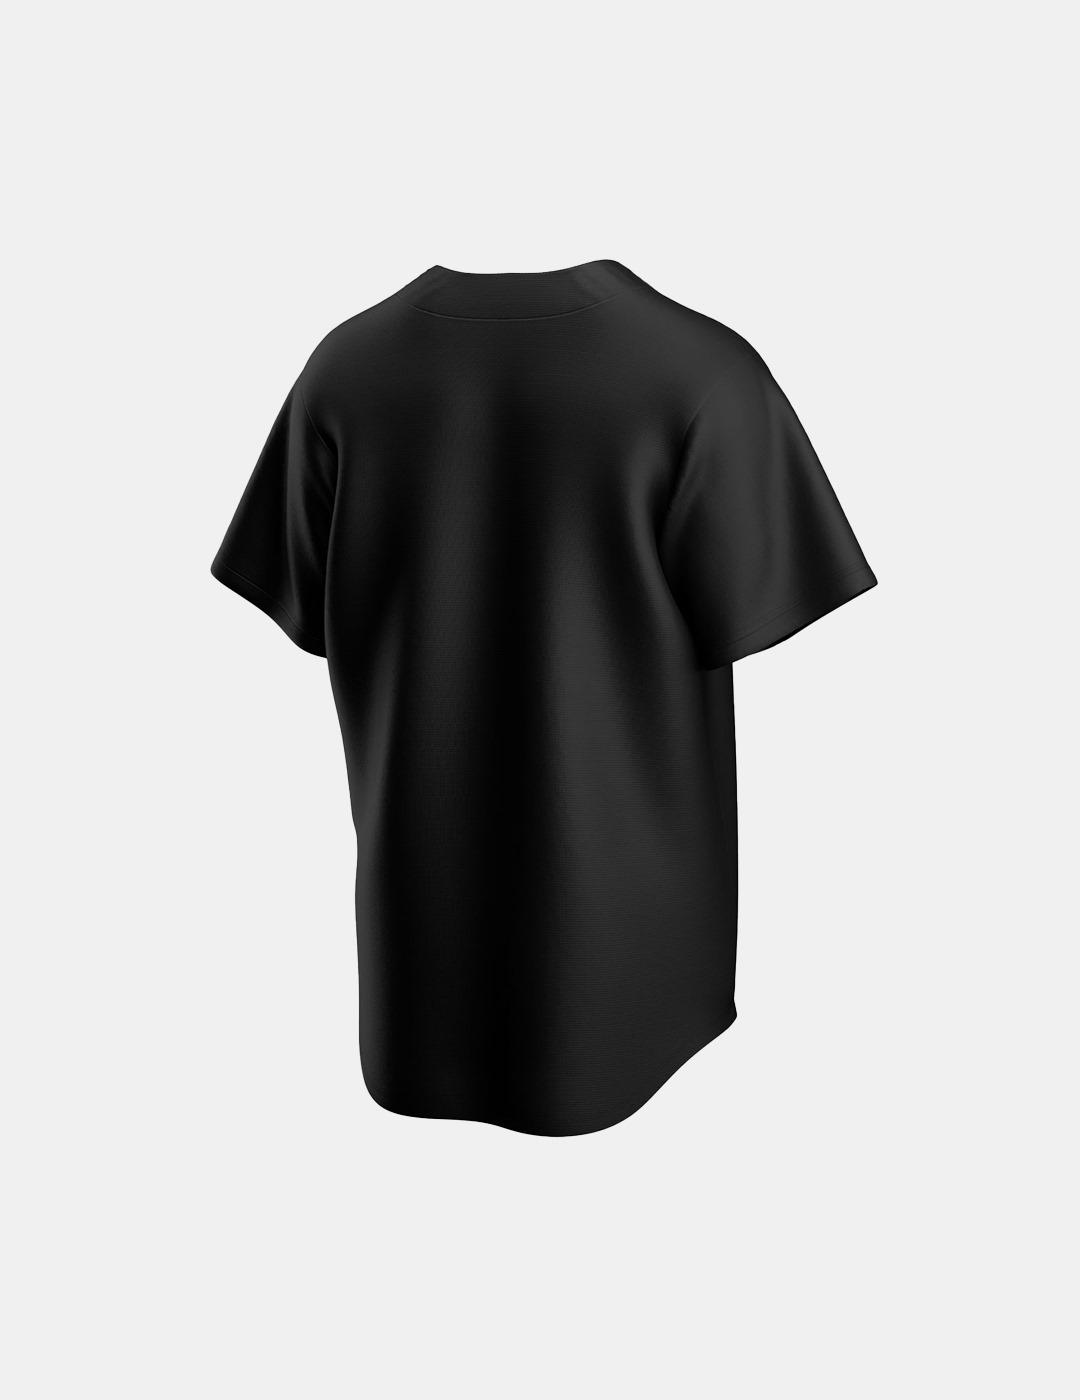 Camisa Nike MLB Replica Tampa Bay Devil Rays Negro